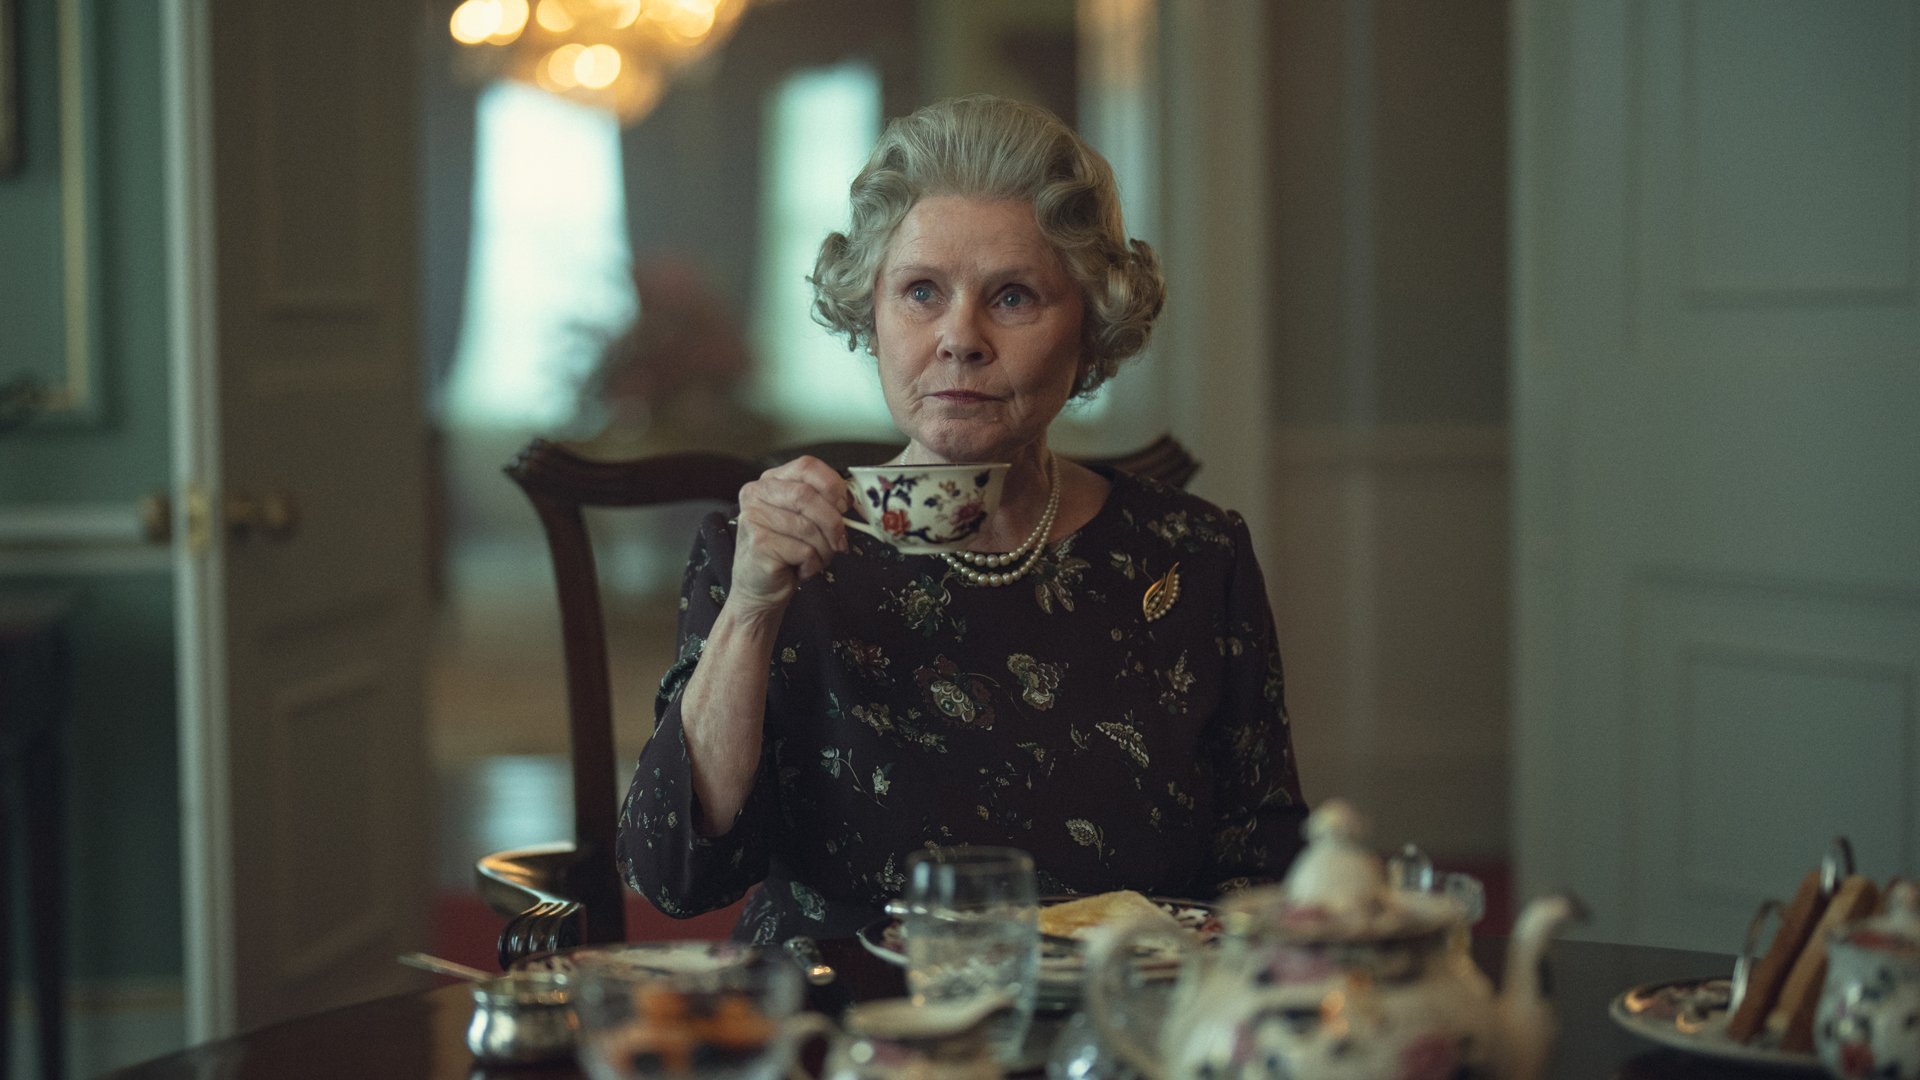 Imelda Staunton as Queen Elizabeth II sitting drinking tea.